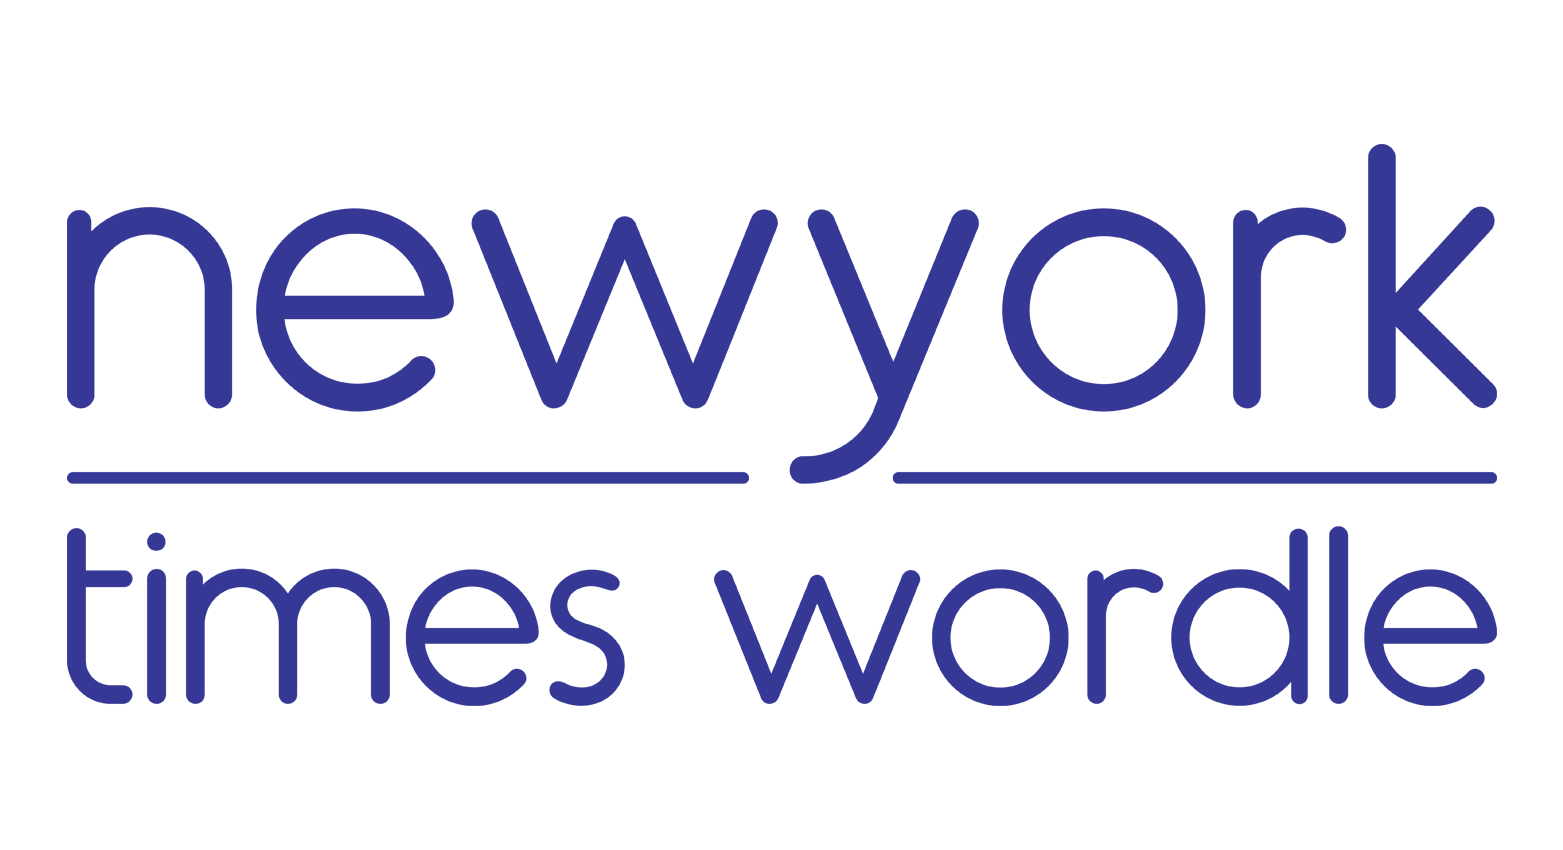 New York Times Wordle